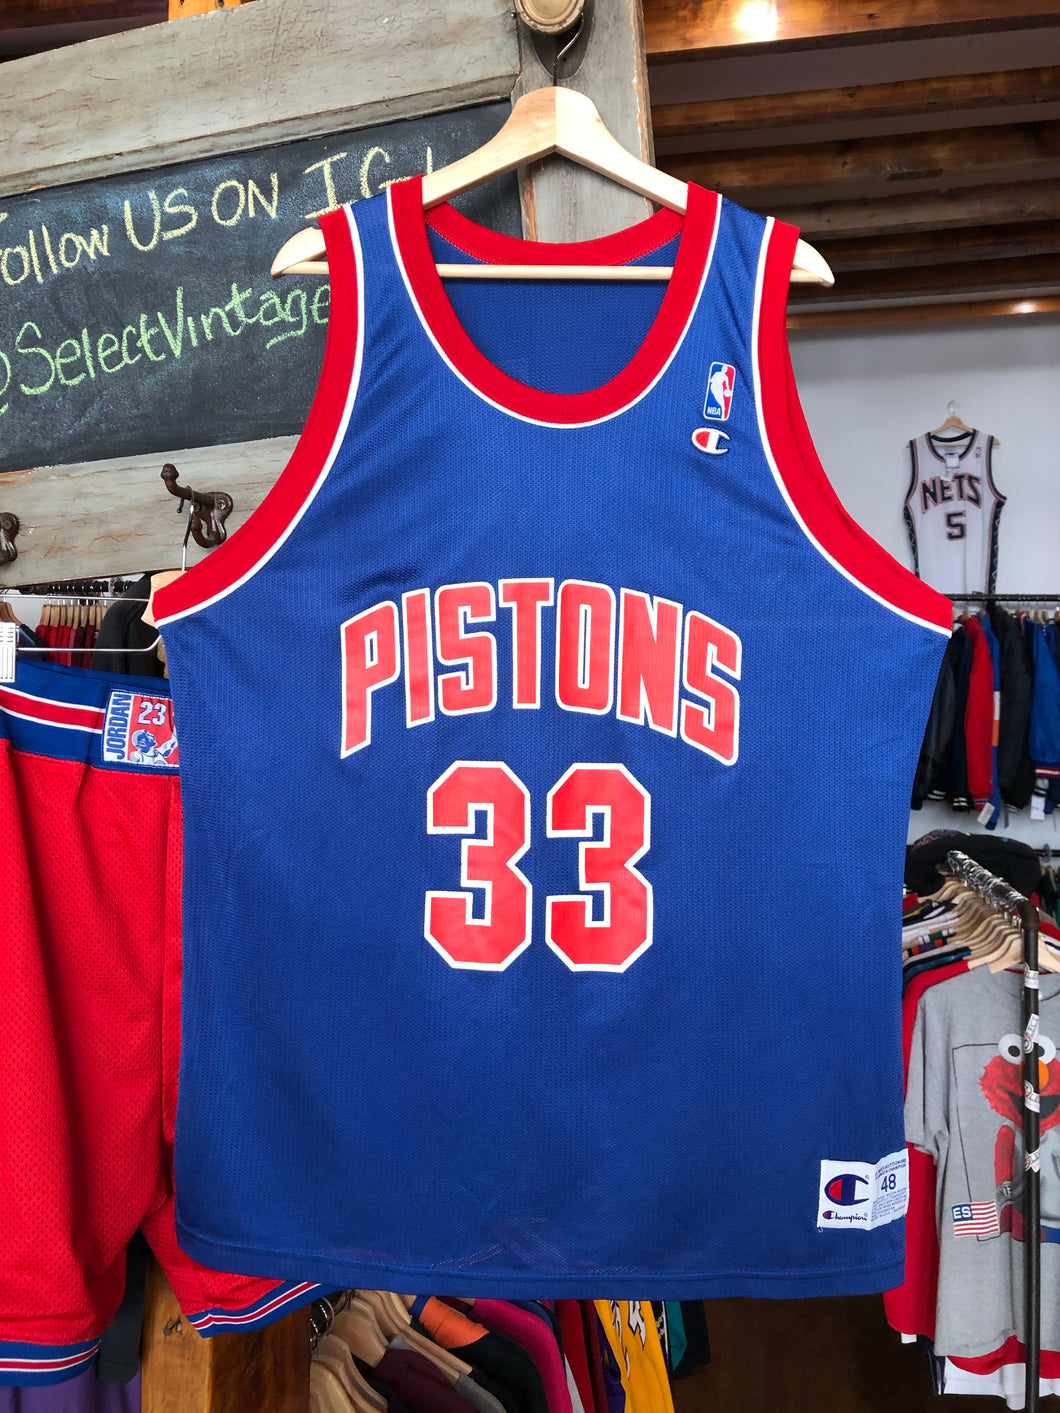 Vintage Deadstock Early 90s Detroit Pistons Grant Hill Jersey 48 XL